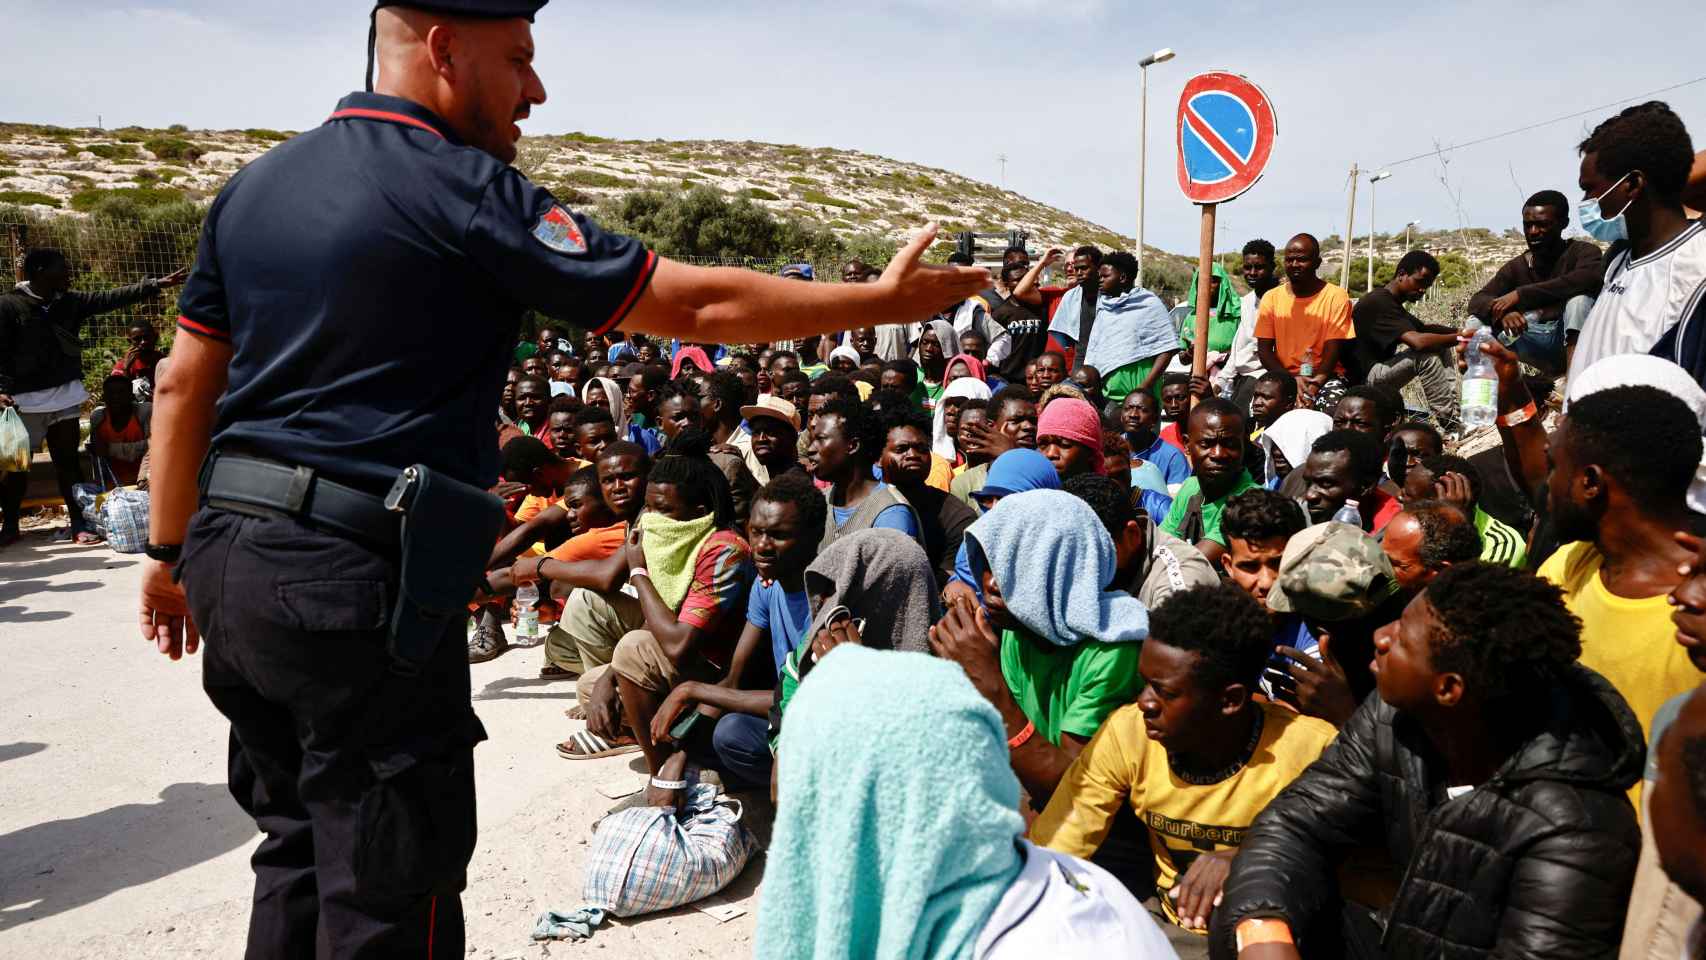 Un grupo de migrantes llegados a la isla italiana de Lampedusa